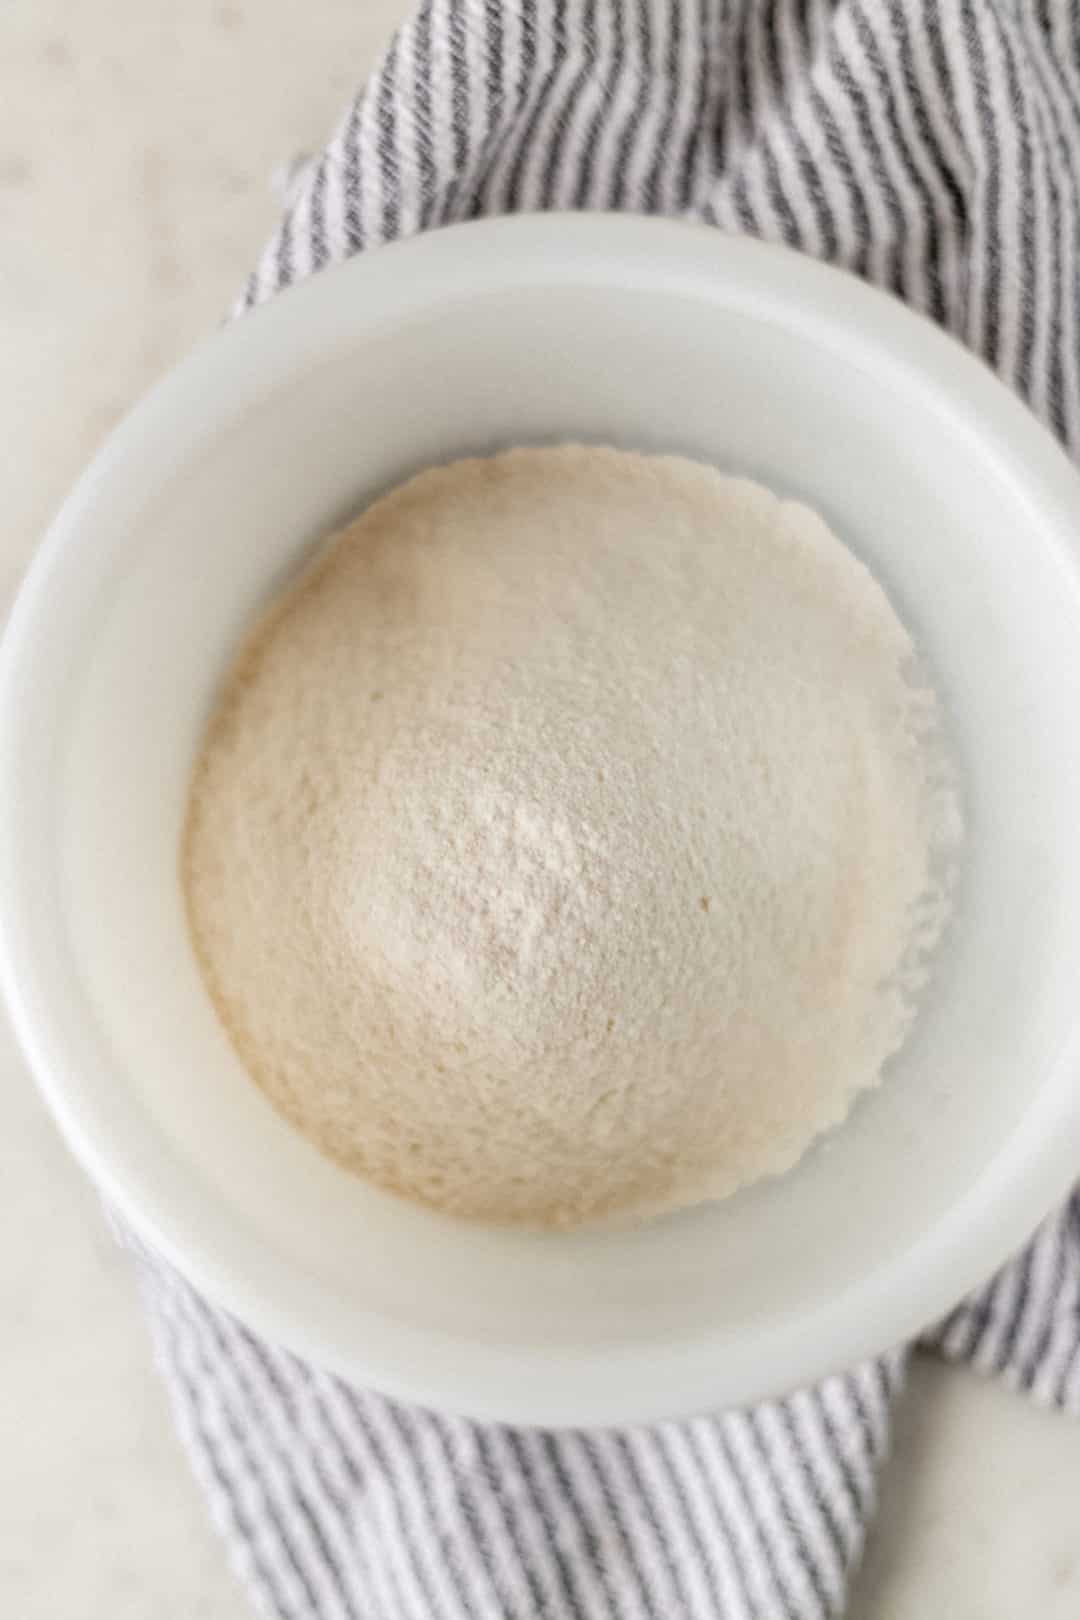 self rising flour in a white bowl over a napkin